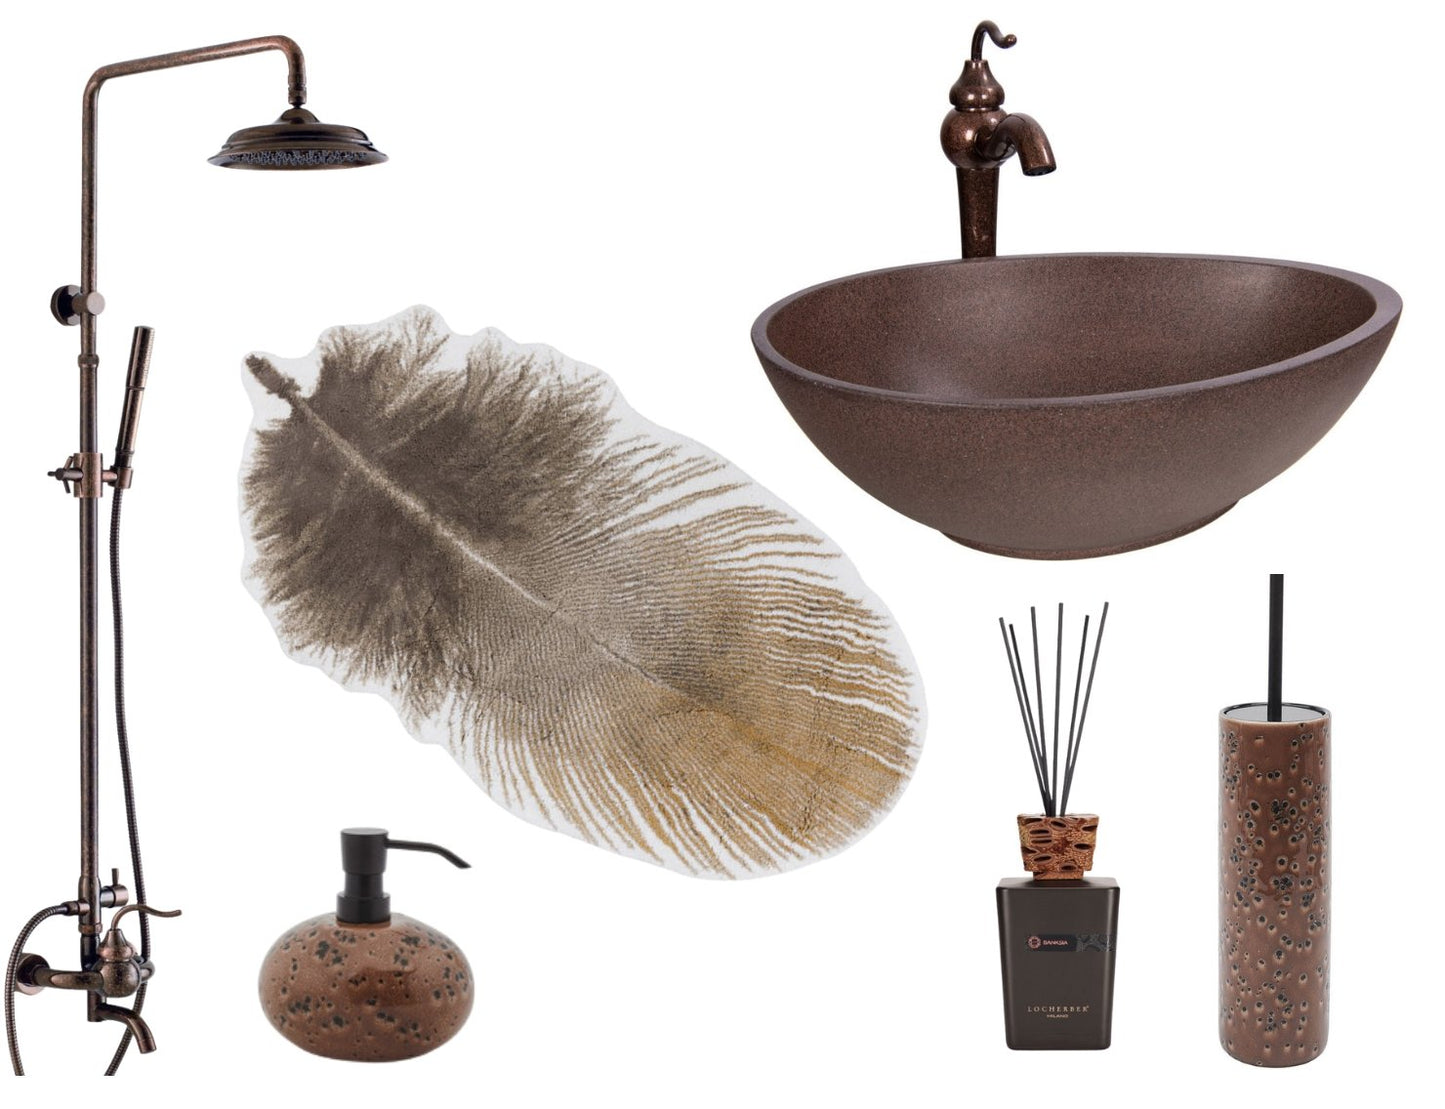 Antique Copper Bathroom Vessel Sink Design Faucet - |VESIMI Design| Luxury and Rustic bathrooms online